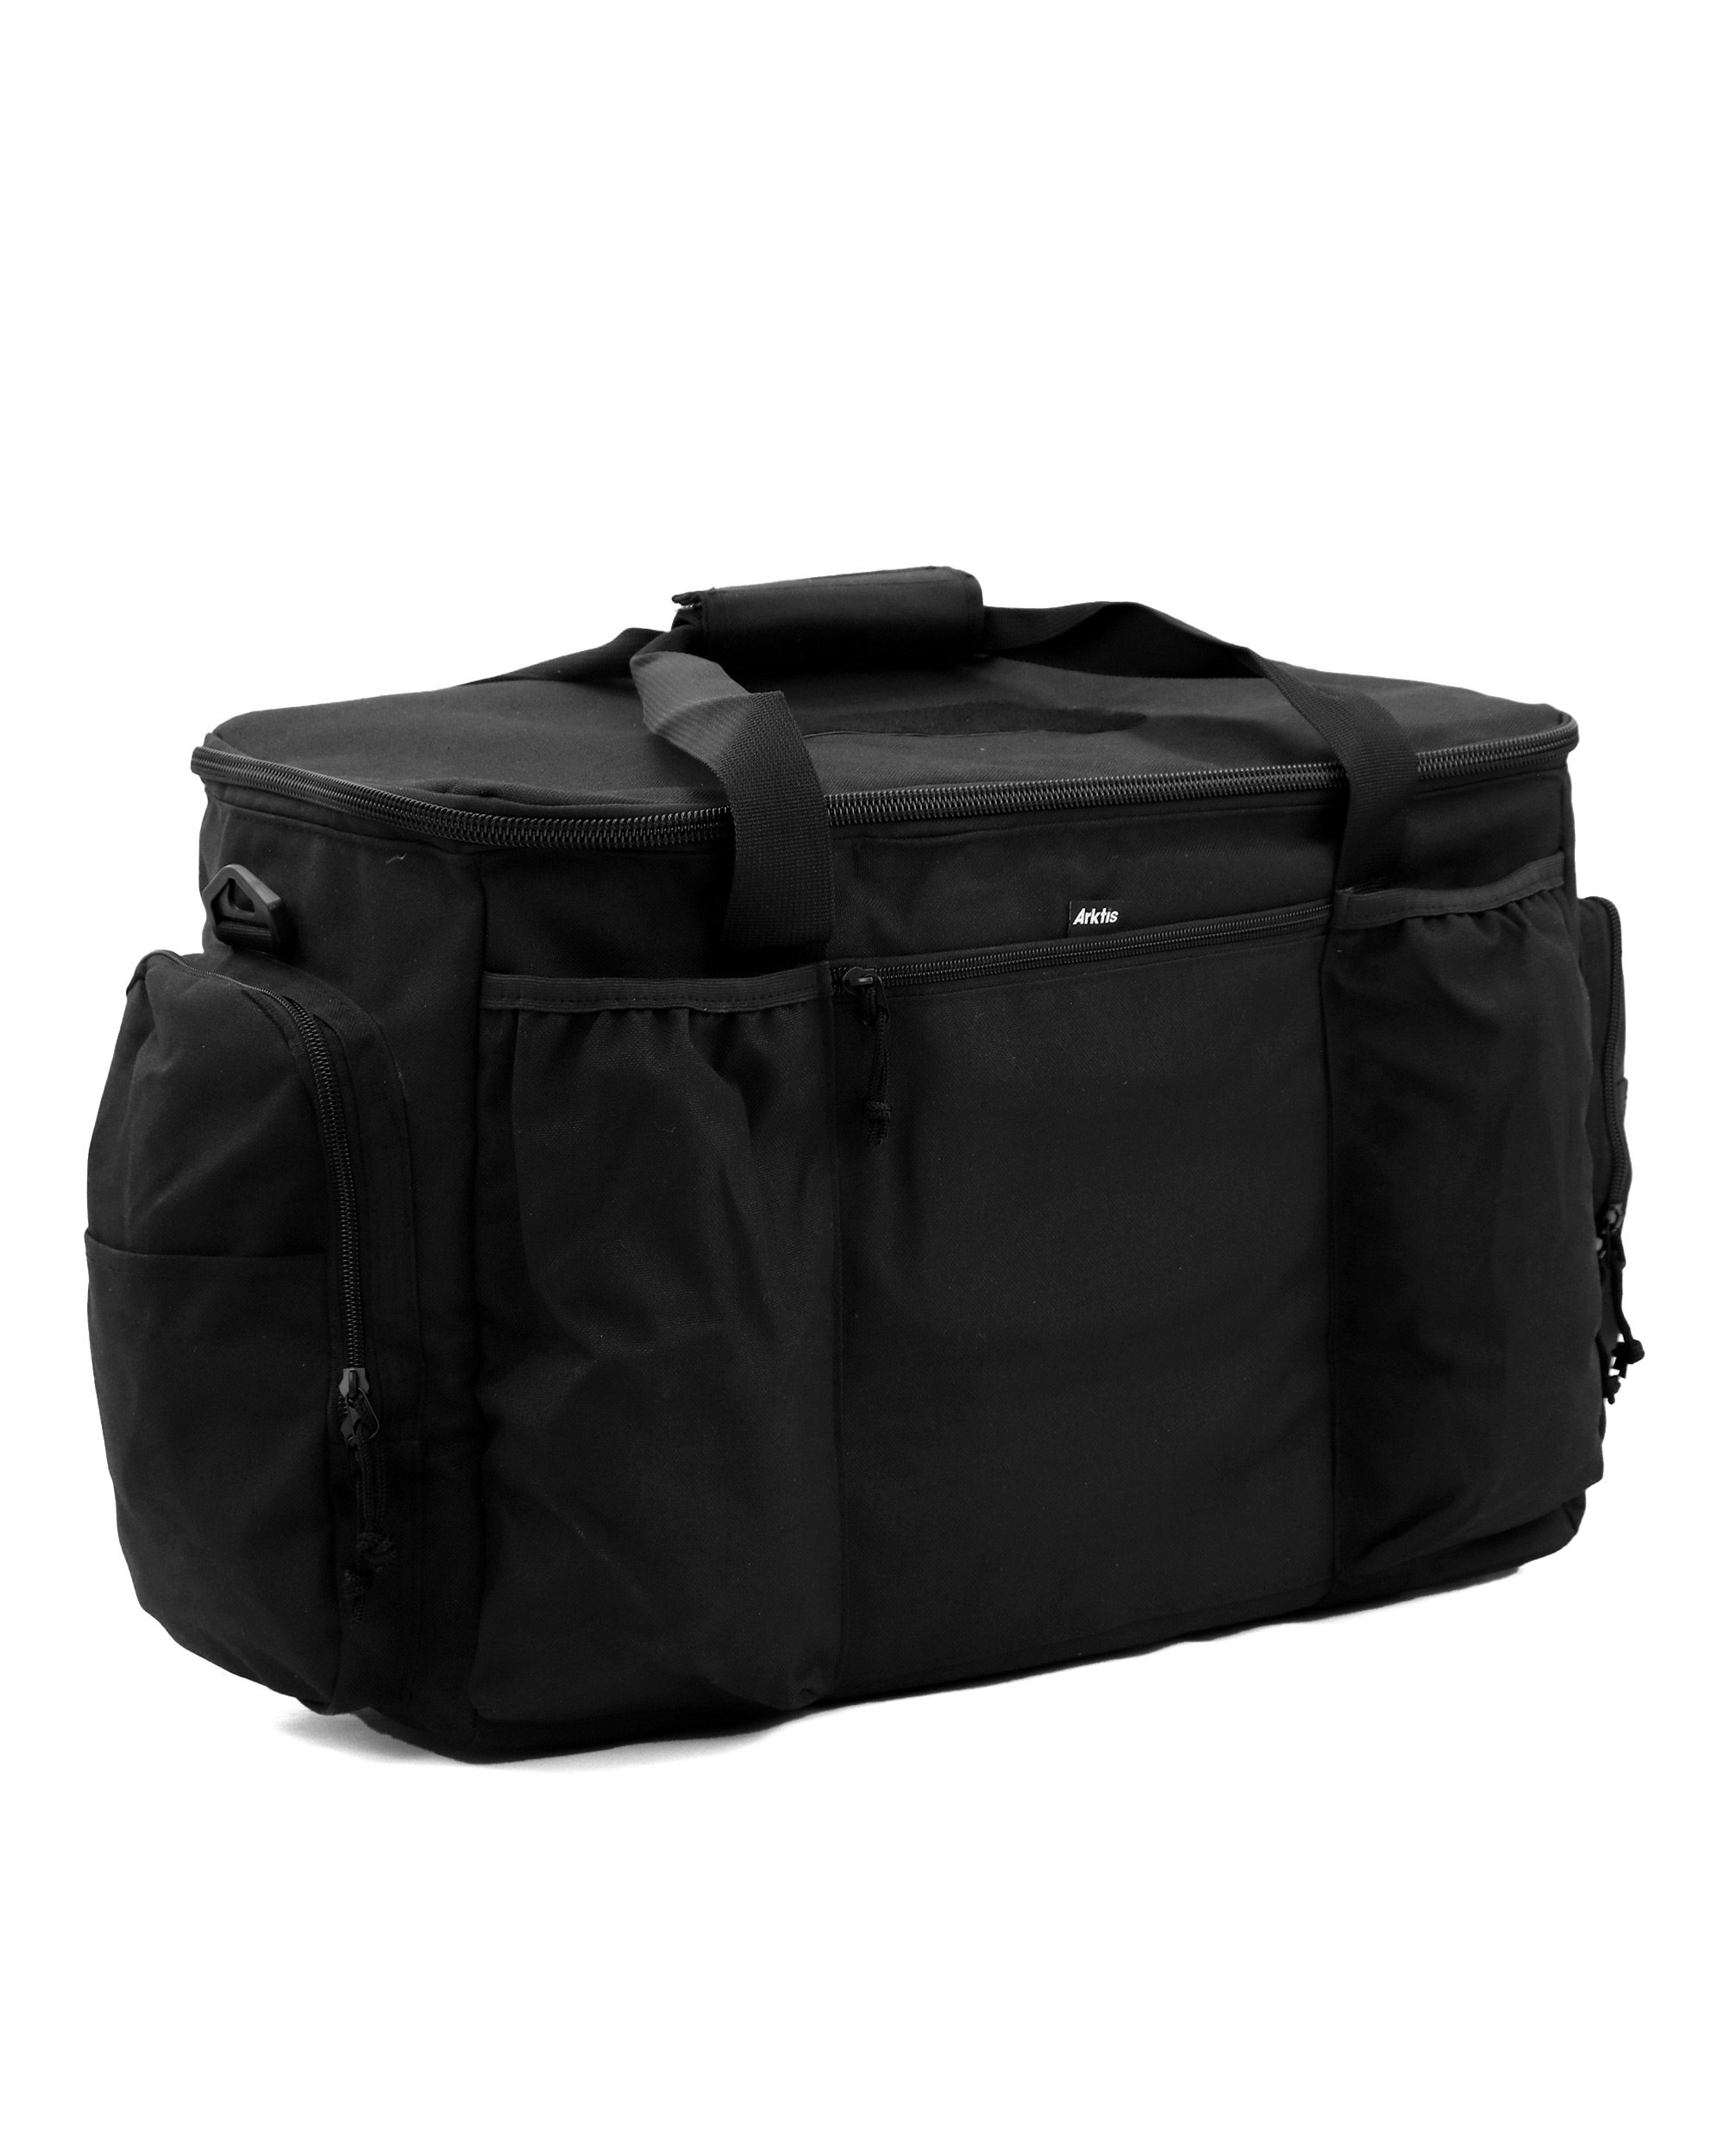 Explorer Tactical Heavy Duty Gun Bag Officer Tactical Range Bag for Gun  Pistol Shooting Ammo Accessories, Black - Explorer Bags